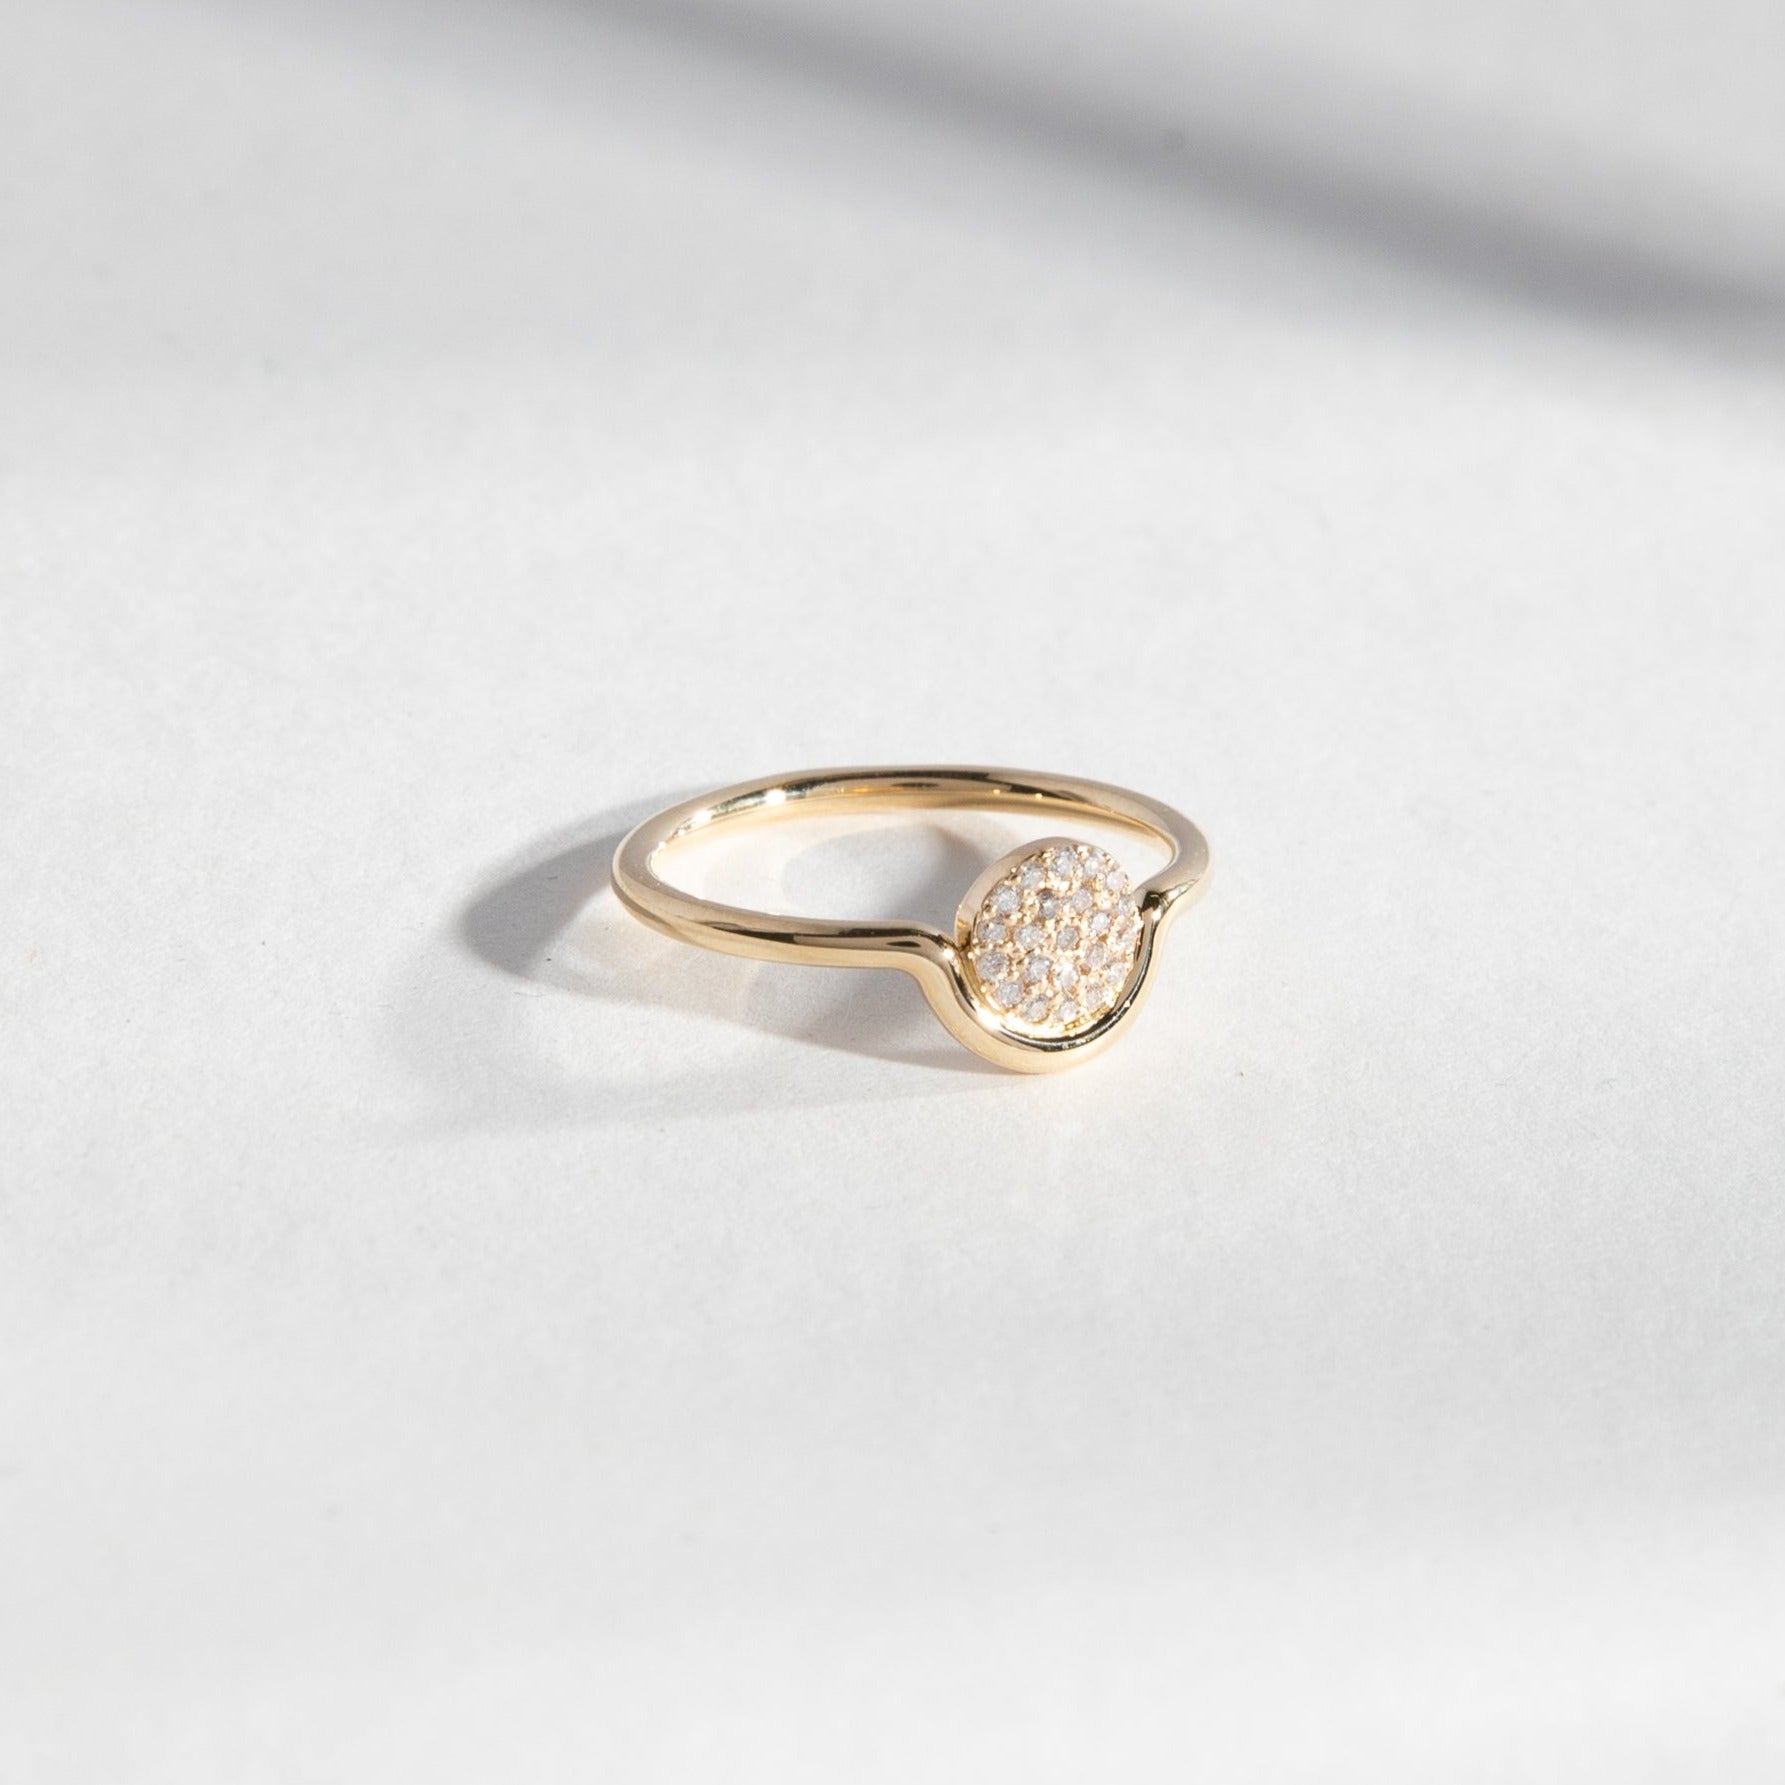 Bodu Cool Ring in 14k Gold set with lab-grown diamonds By SHW Fine Jewelry Codu Alternative Ring in 14k Gold set with lab-grown diamonds By SHW Fine Jewelry NYC